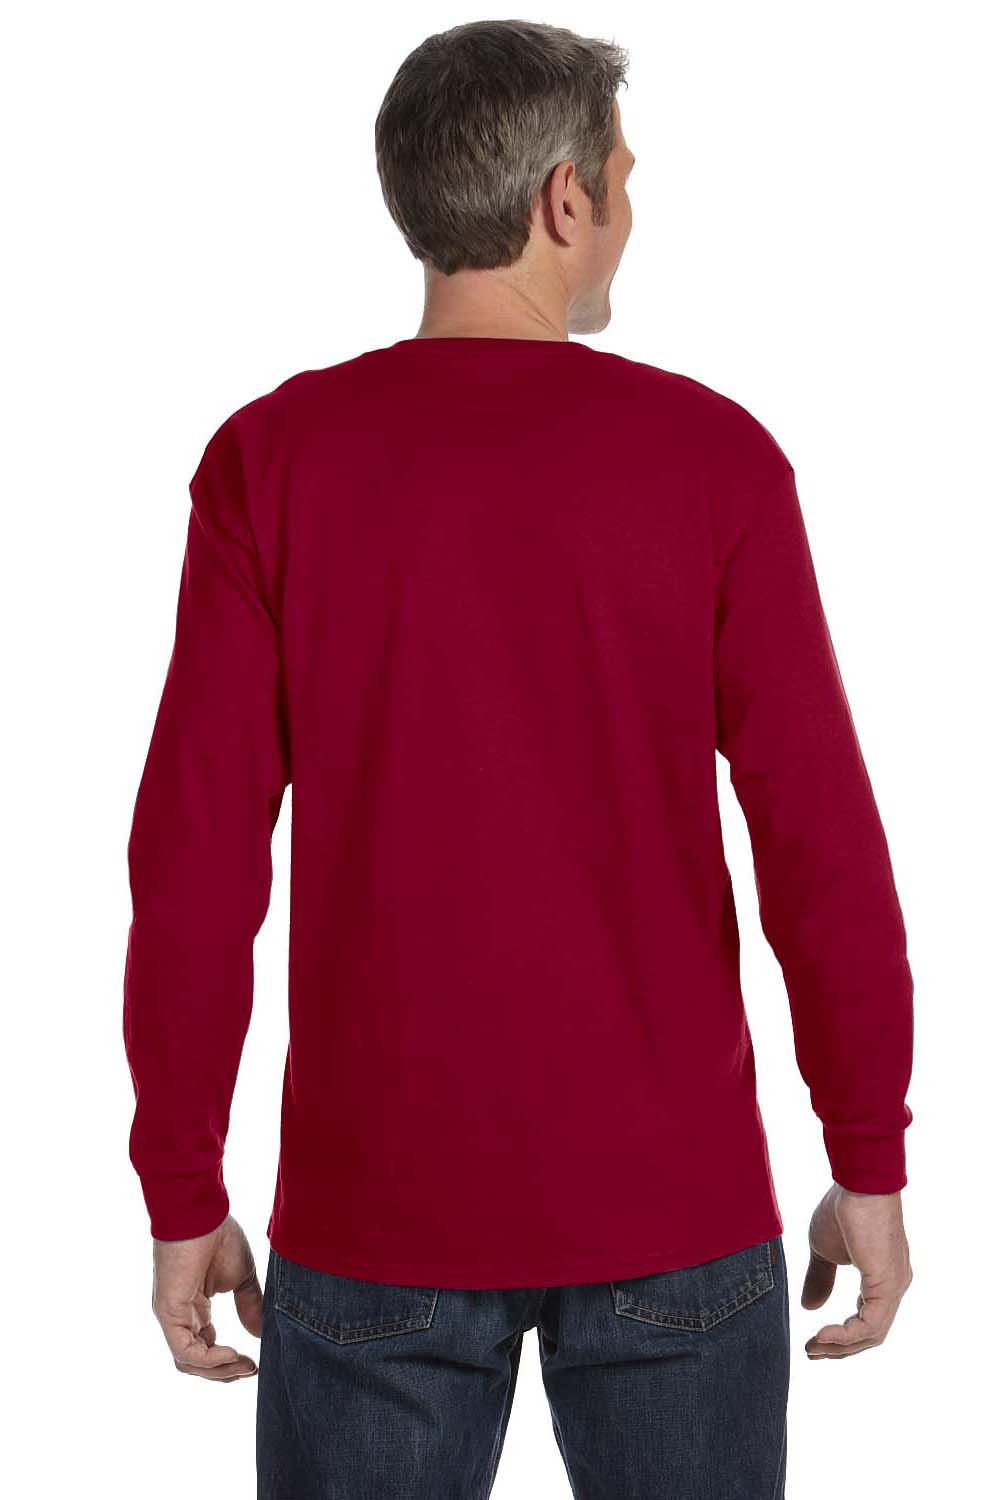 Jerzees 29L Mens Dri-Power Moisture Wicking Long Sleeve Crewneck T-Shirt Cardinal Red Back